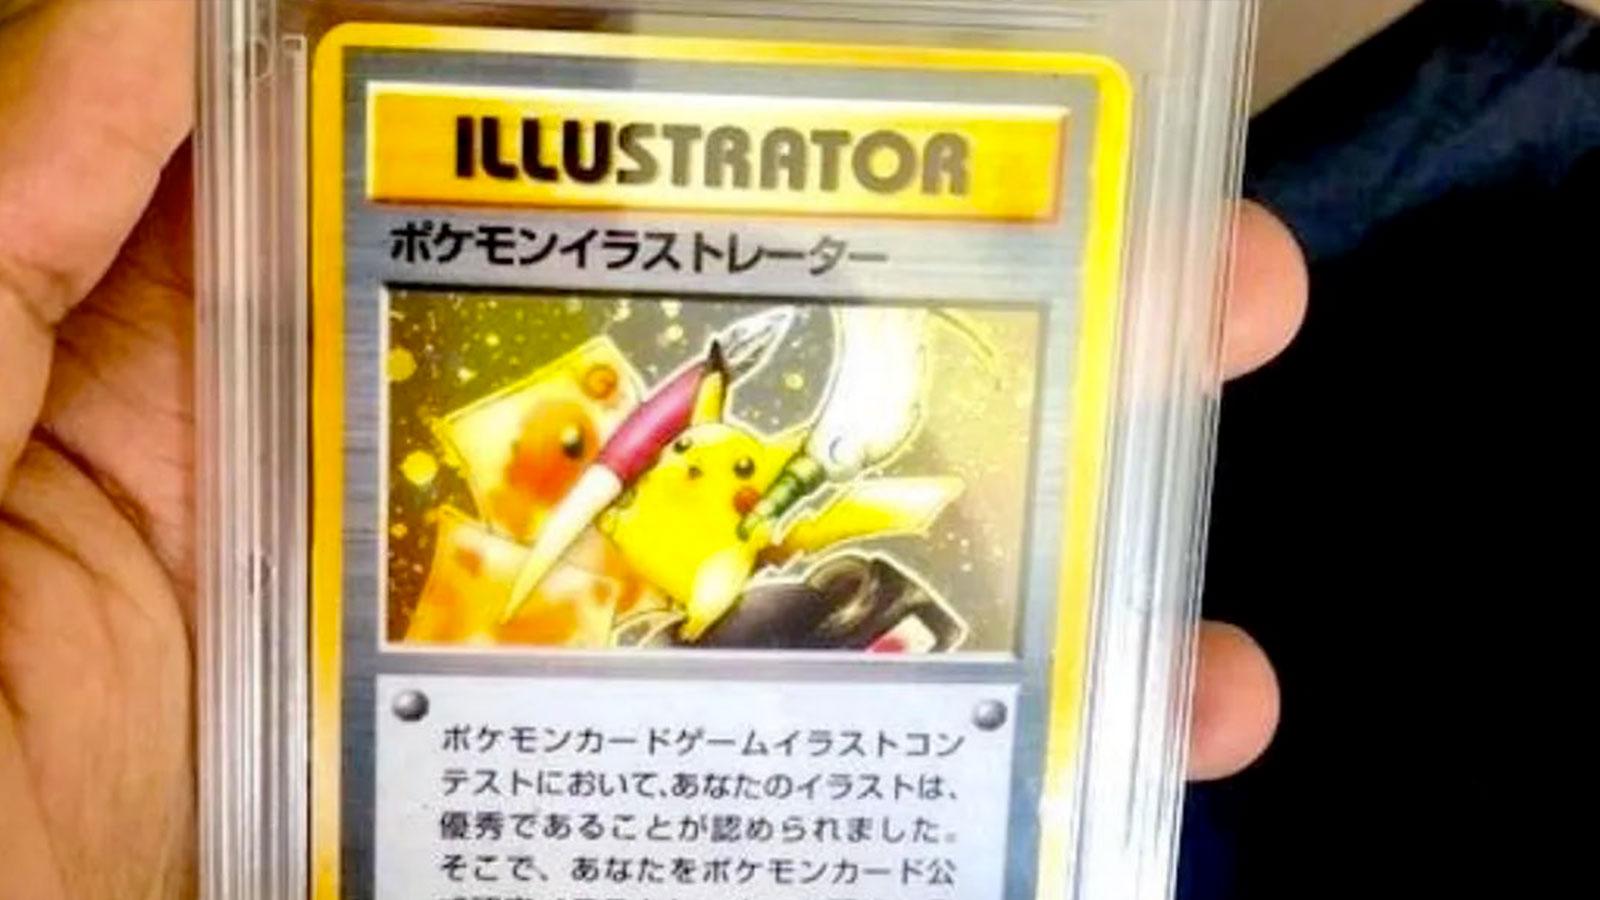 Porte-cartes Pokemon au motif de Pikachu